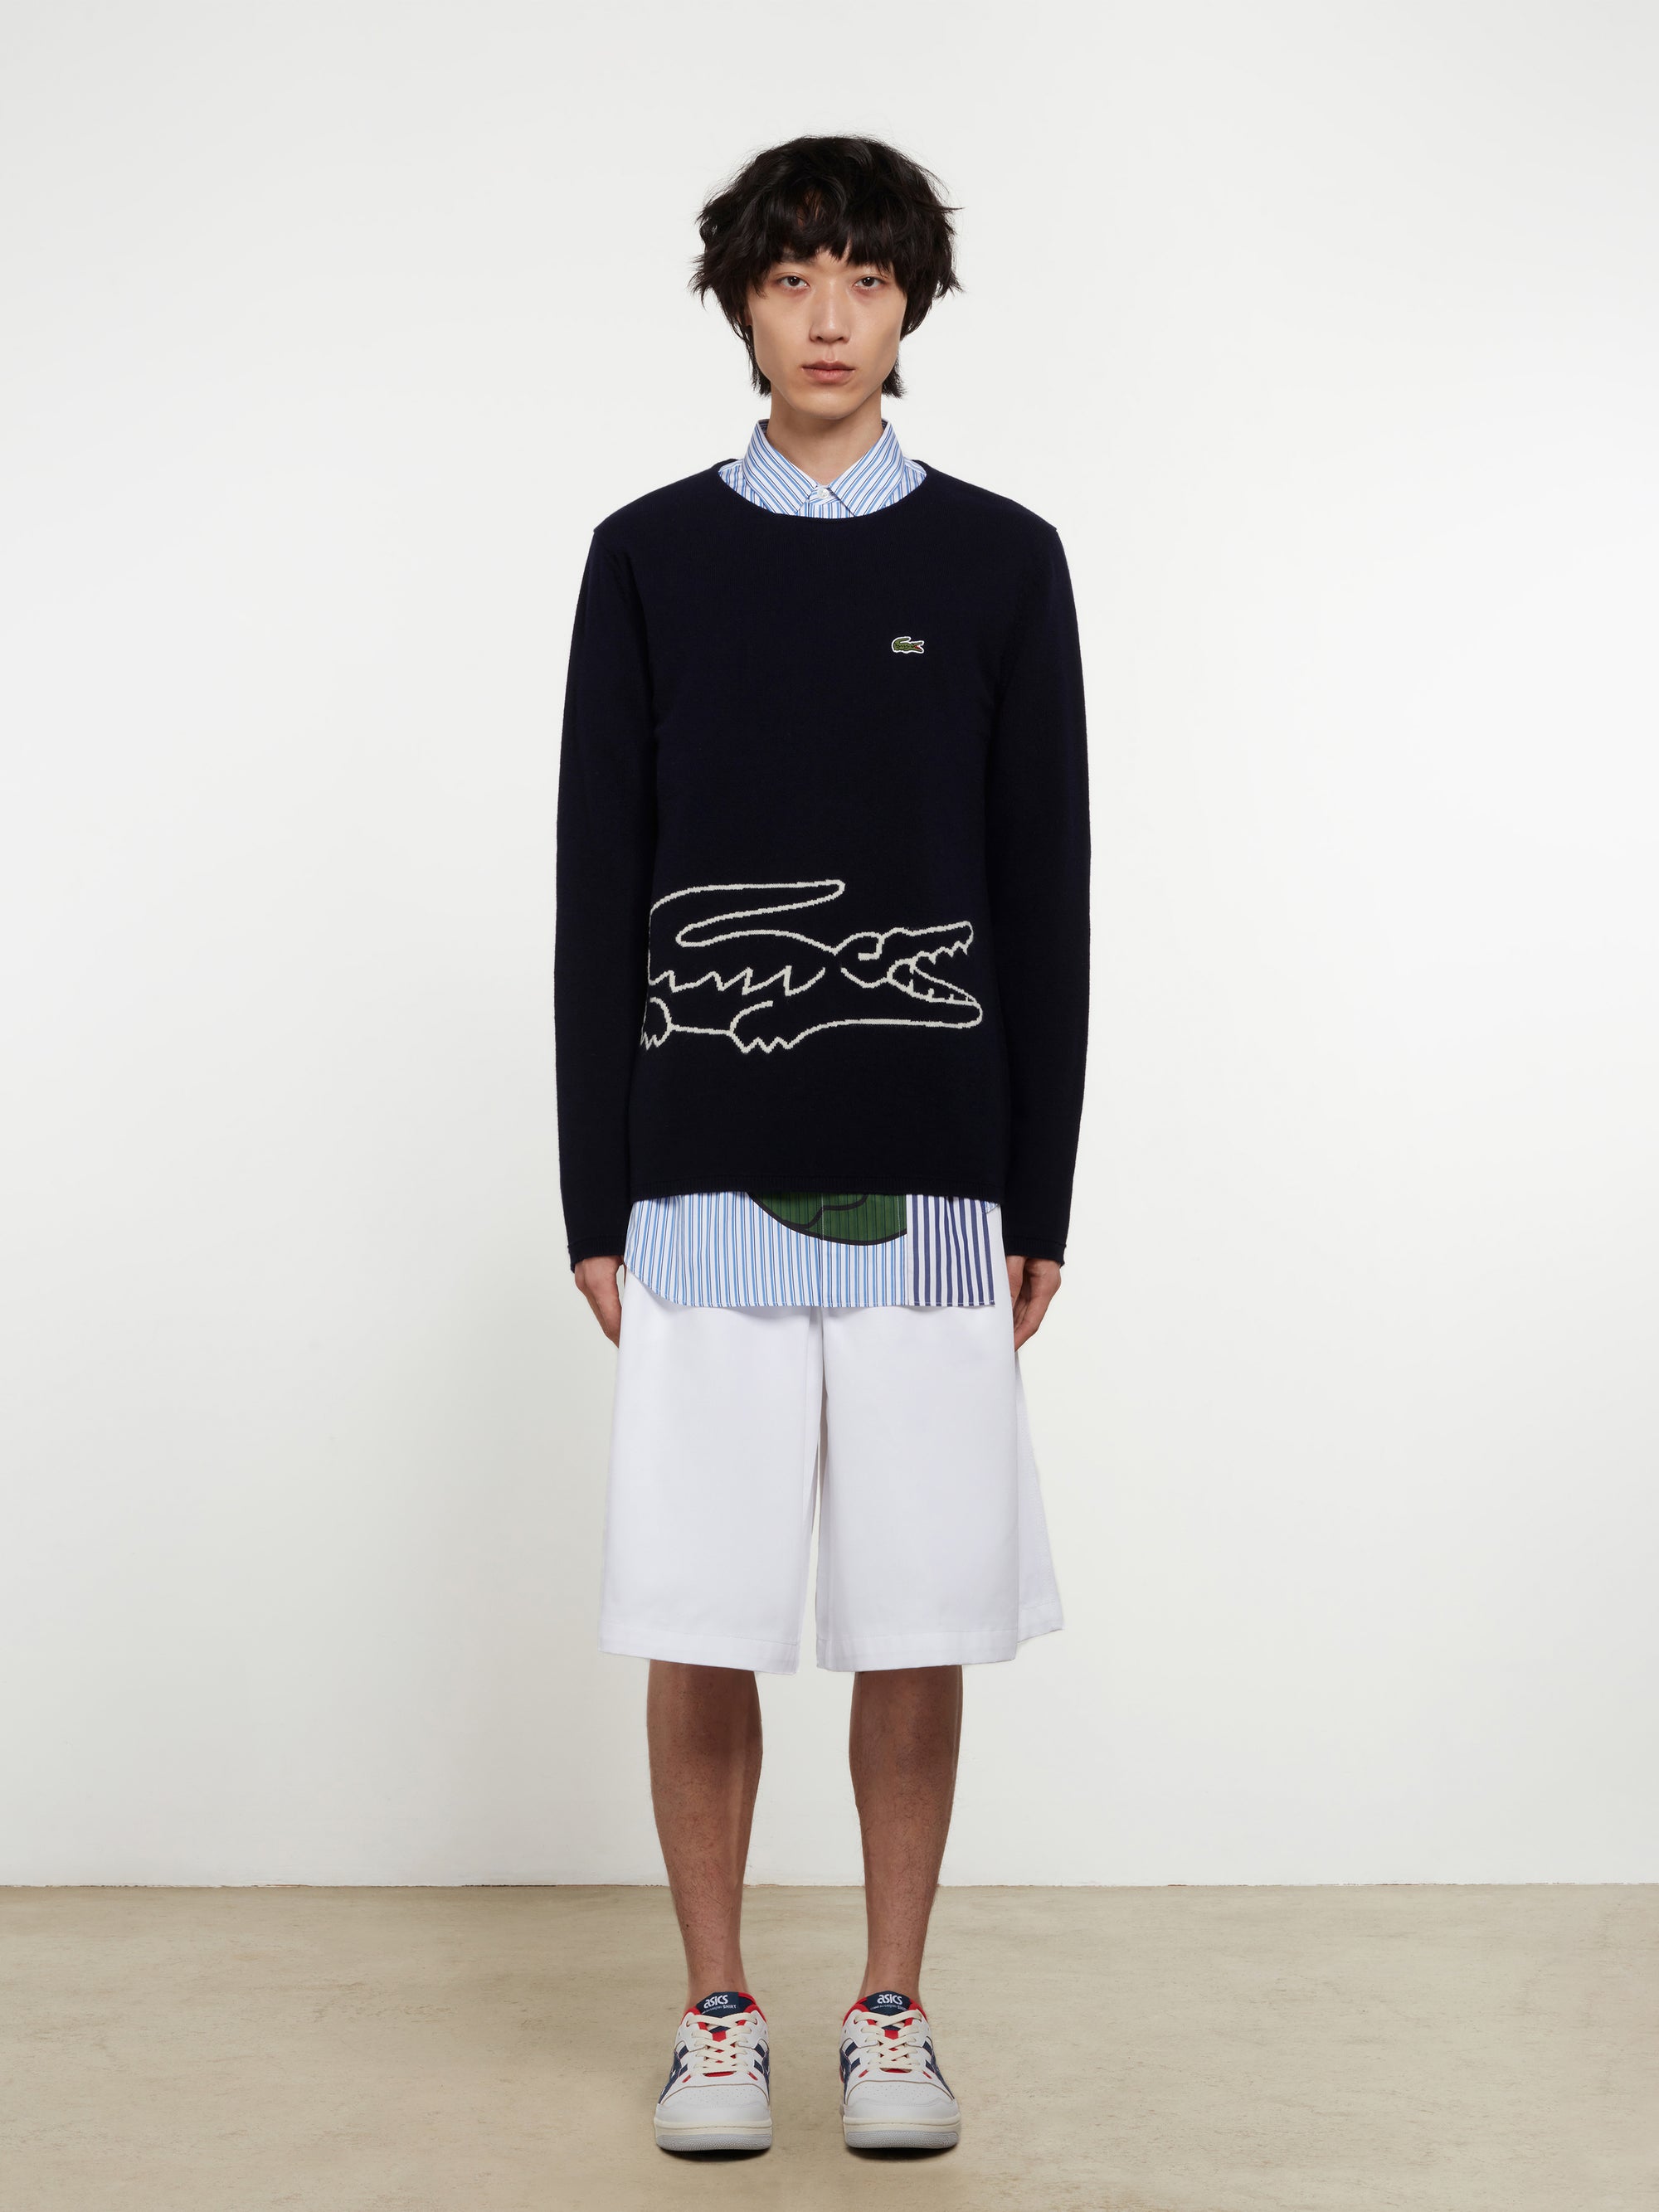 CDG Shirt - Lacoste Men's Knit Sweater - (Black) view 4